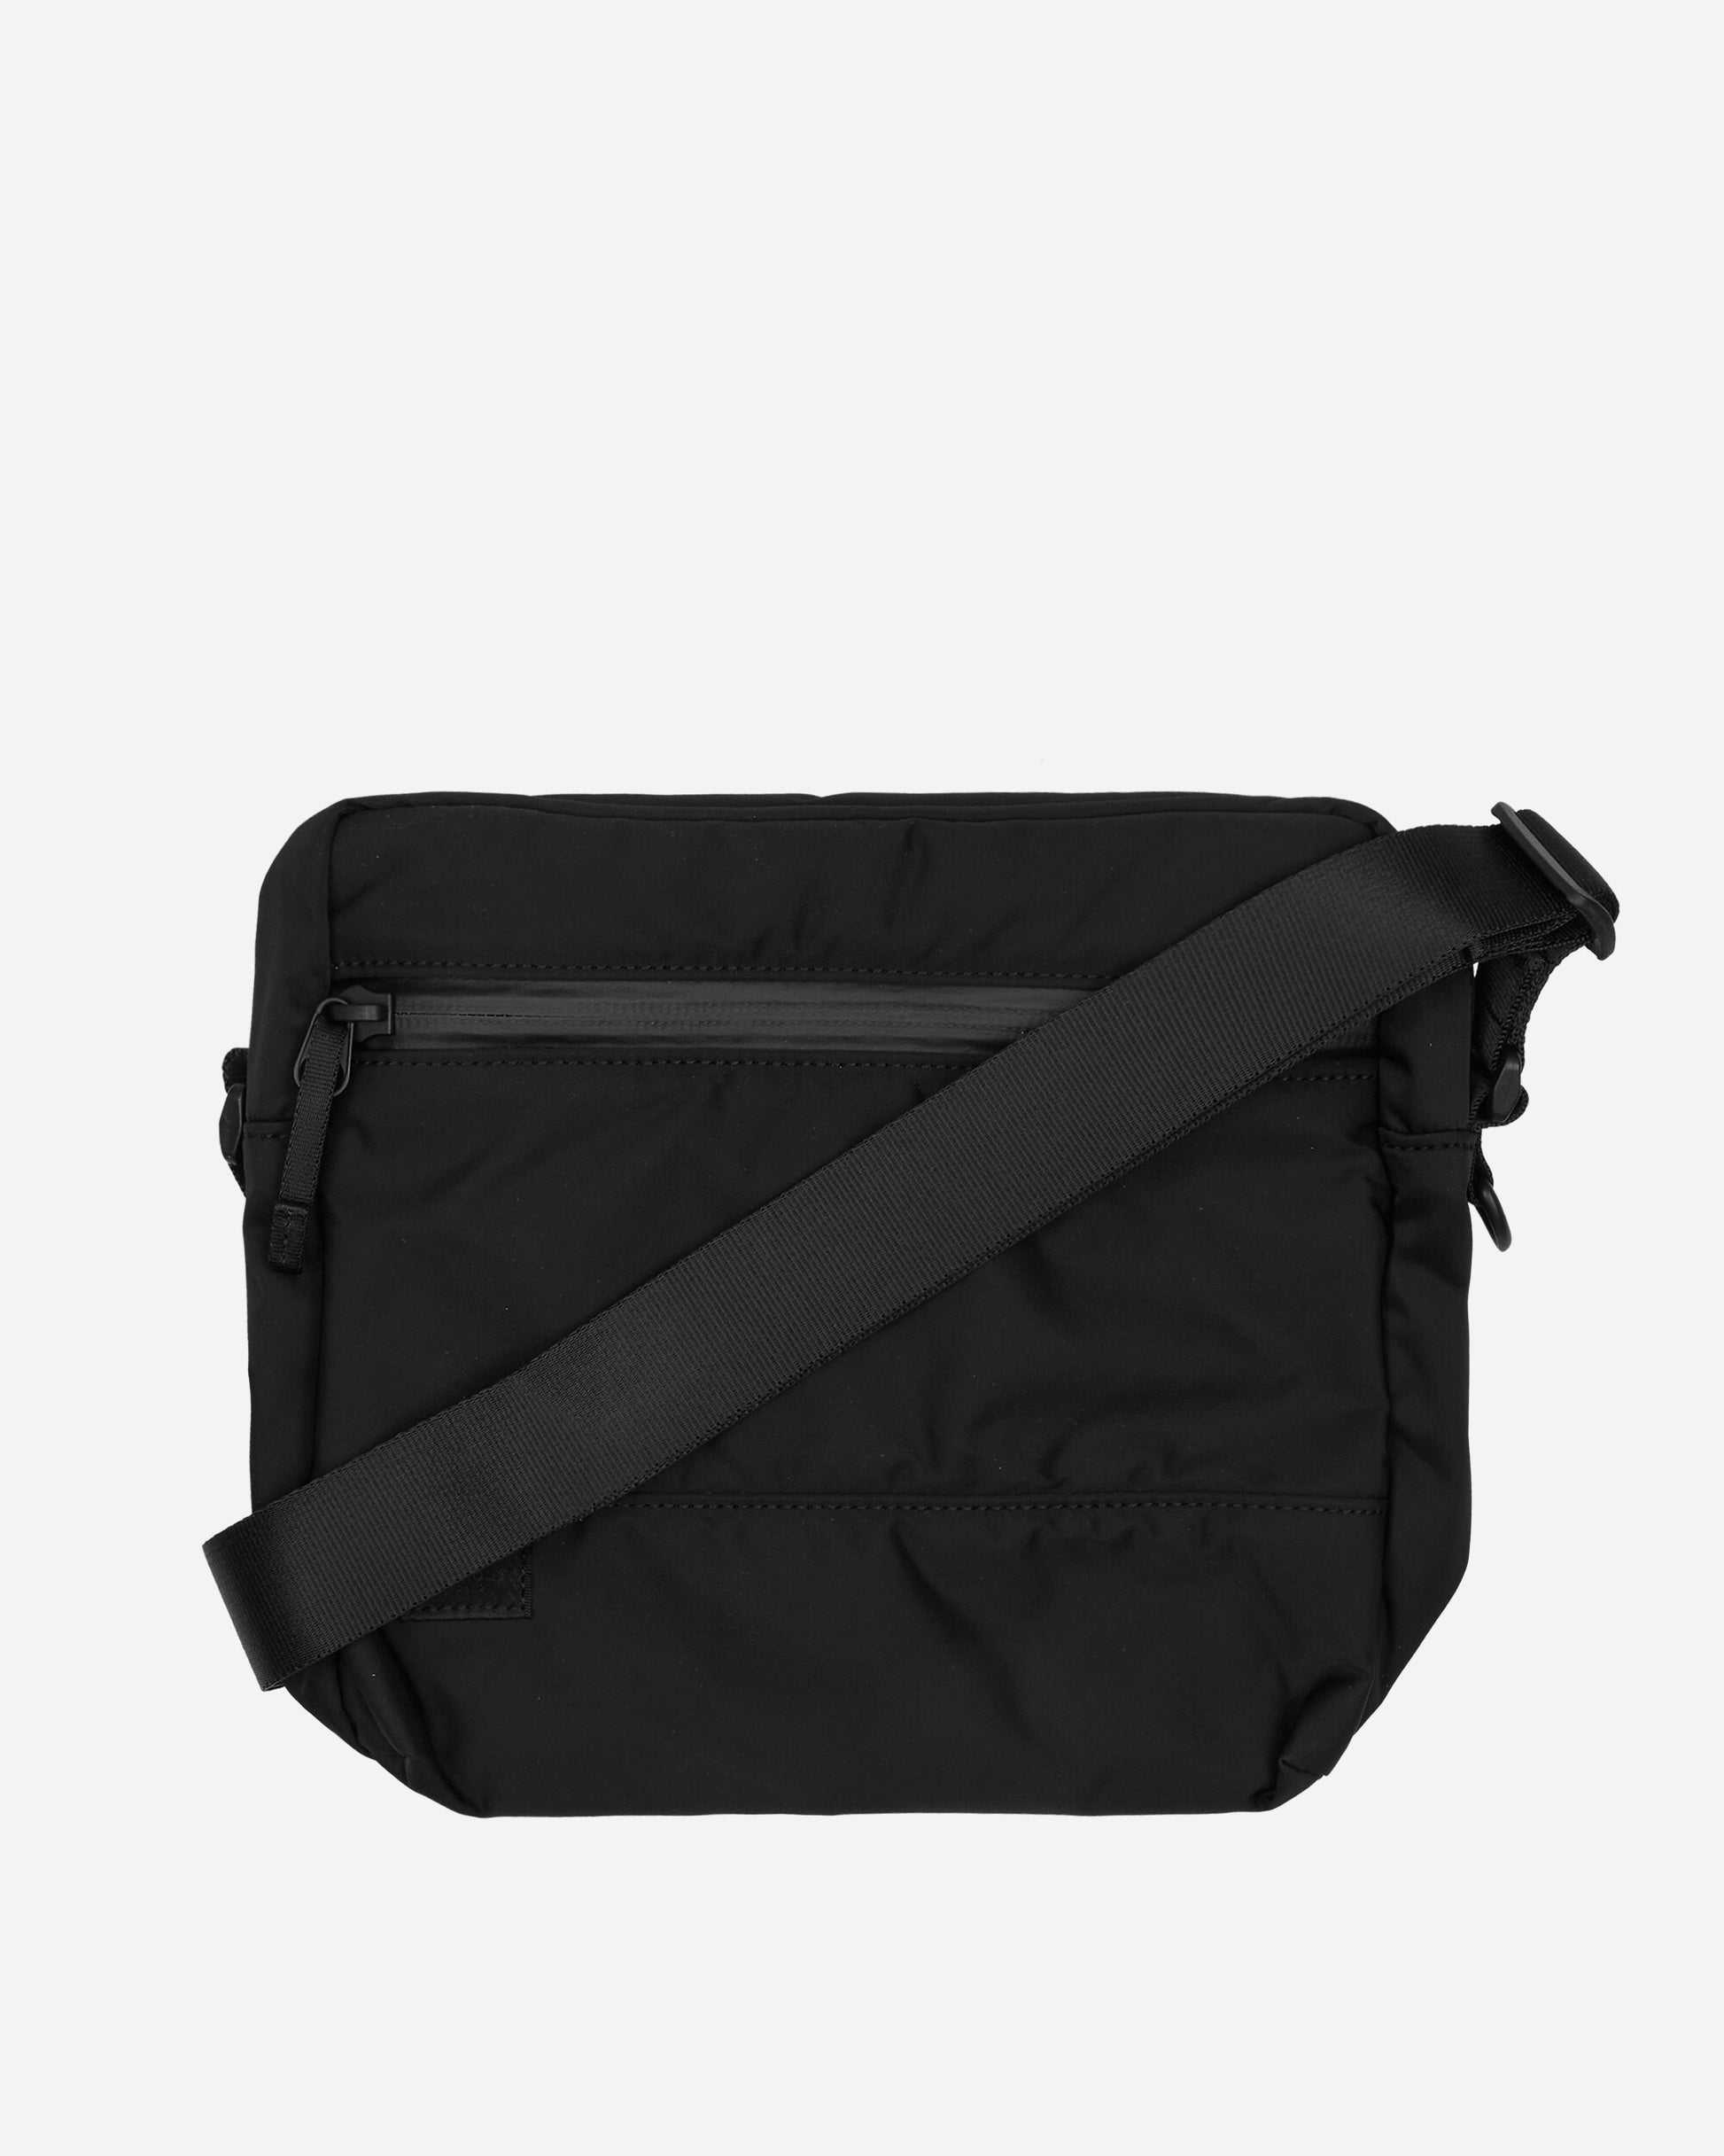 Ramidus Square Shoulder Bag Black Bags and Backpacks Shoulder Bags B011094 001